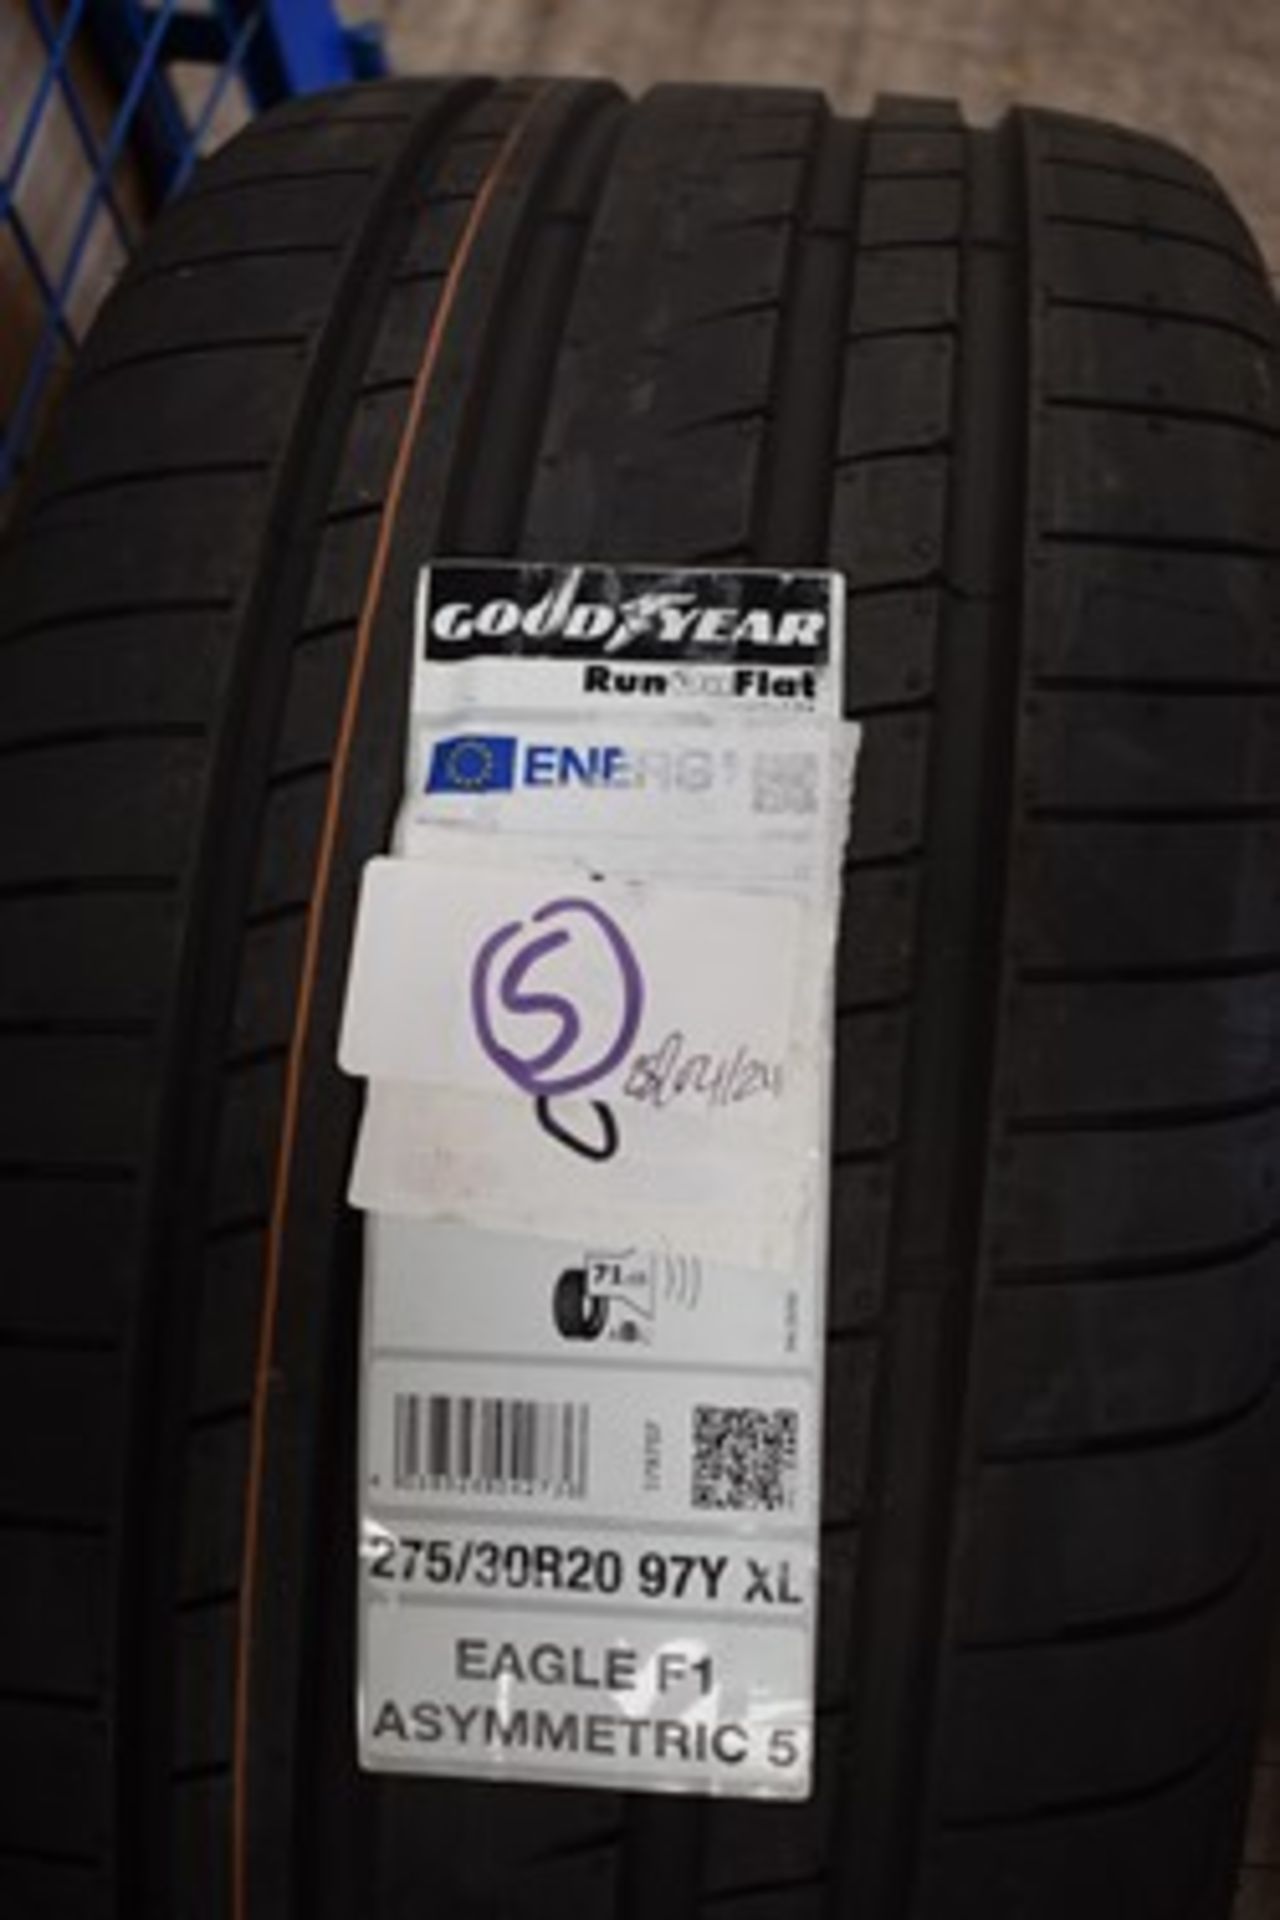 1 x Goodyear Eagle F1 Asymmetric 5 run on flat tyre, size 275/30R20 97Y XL - new with label (cage